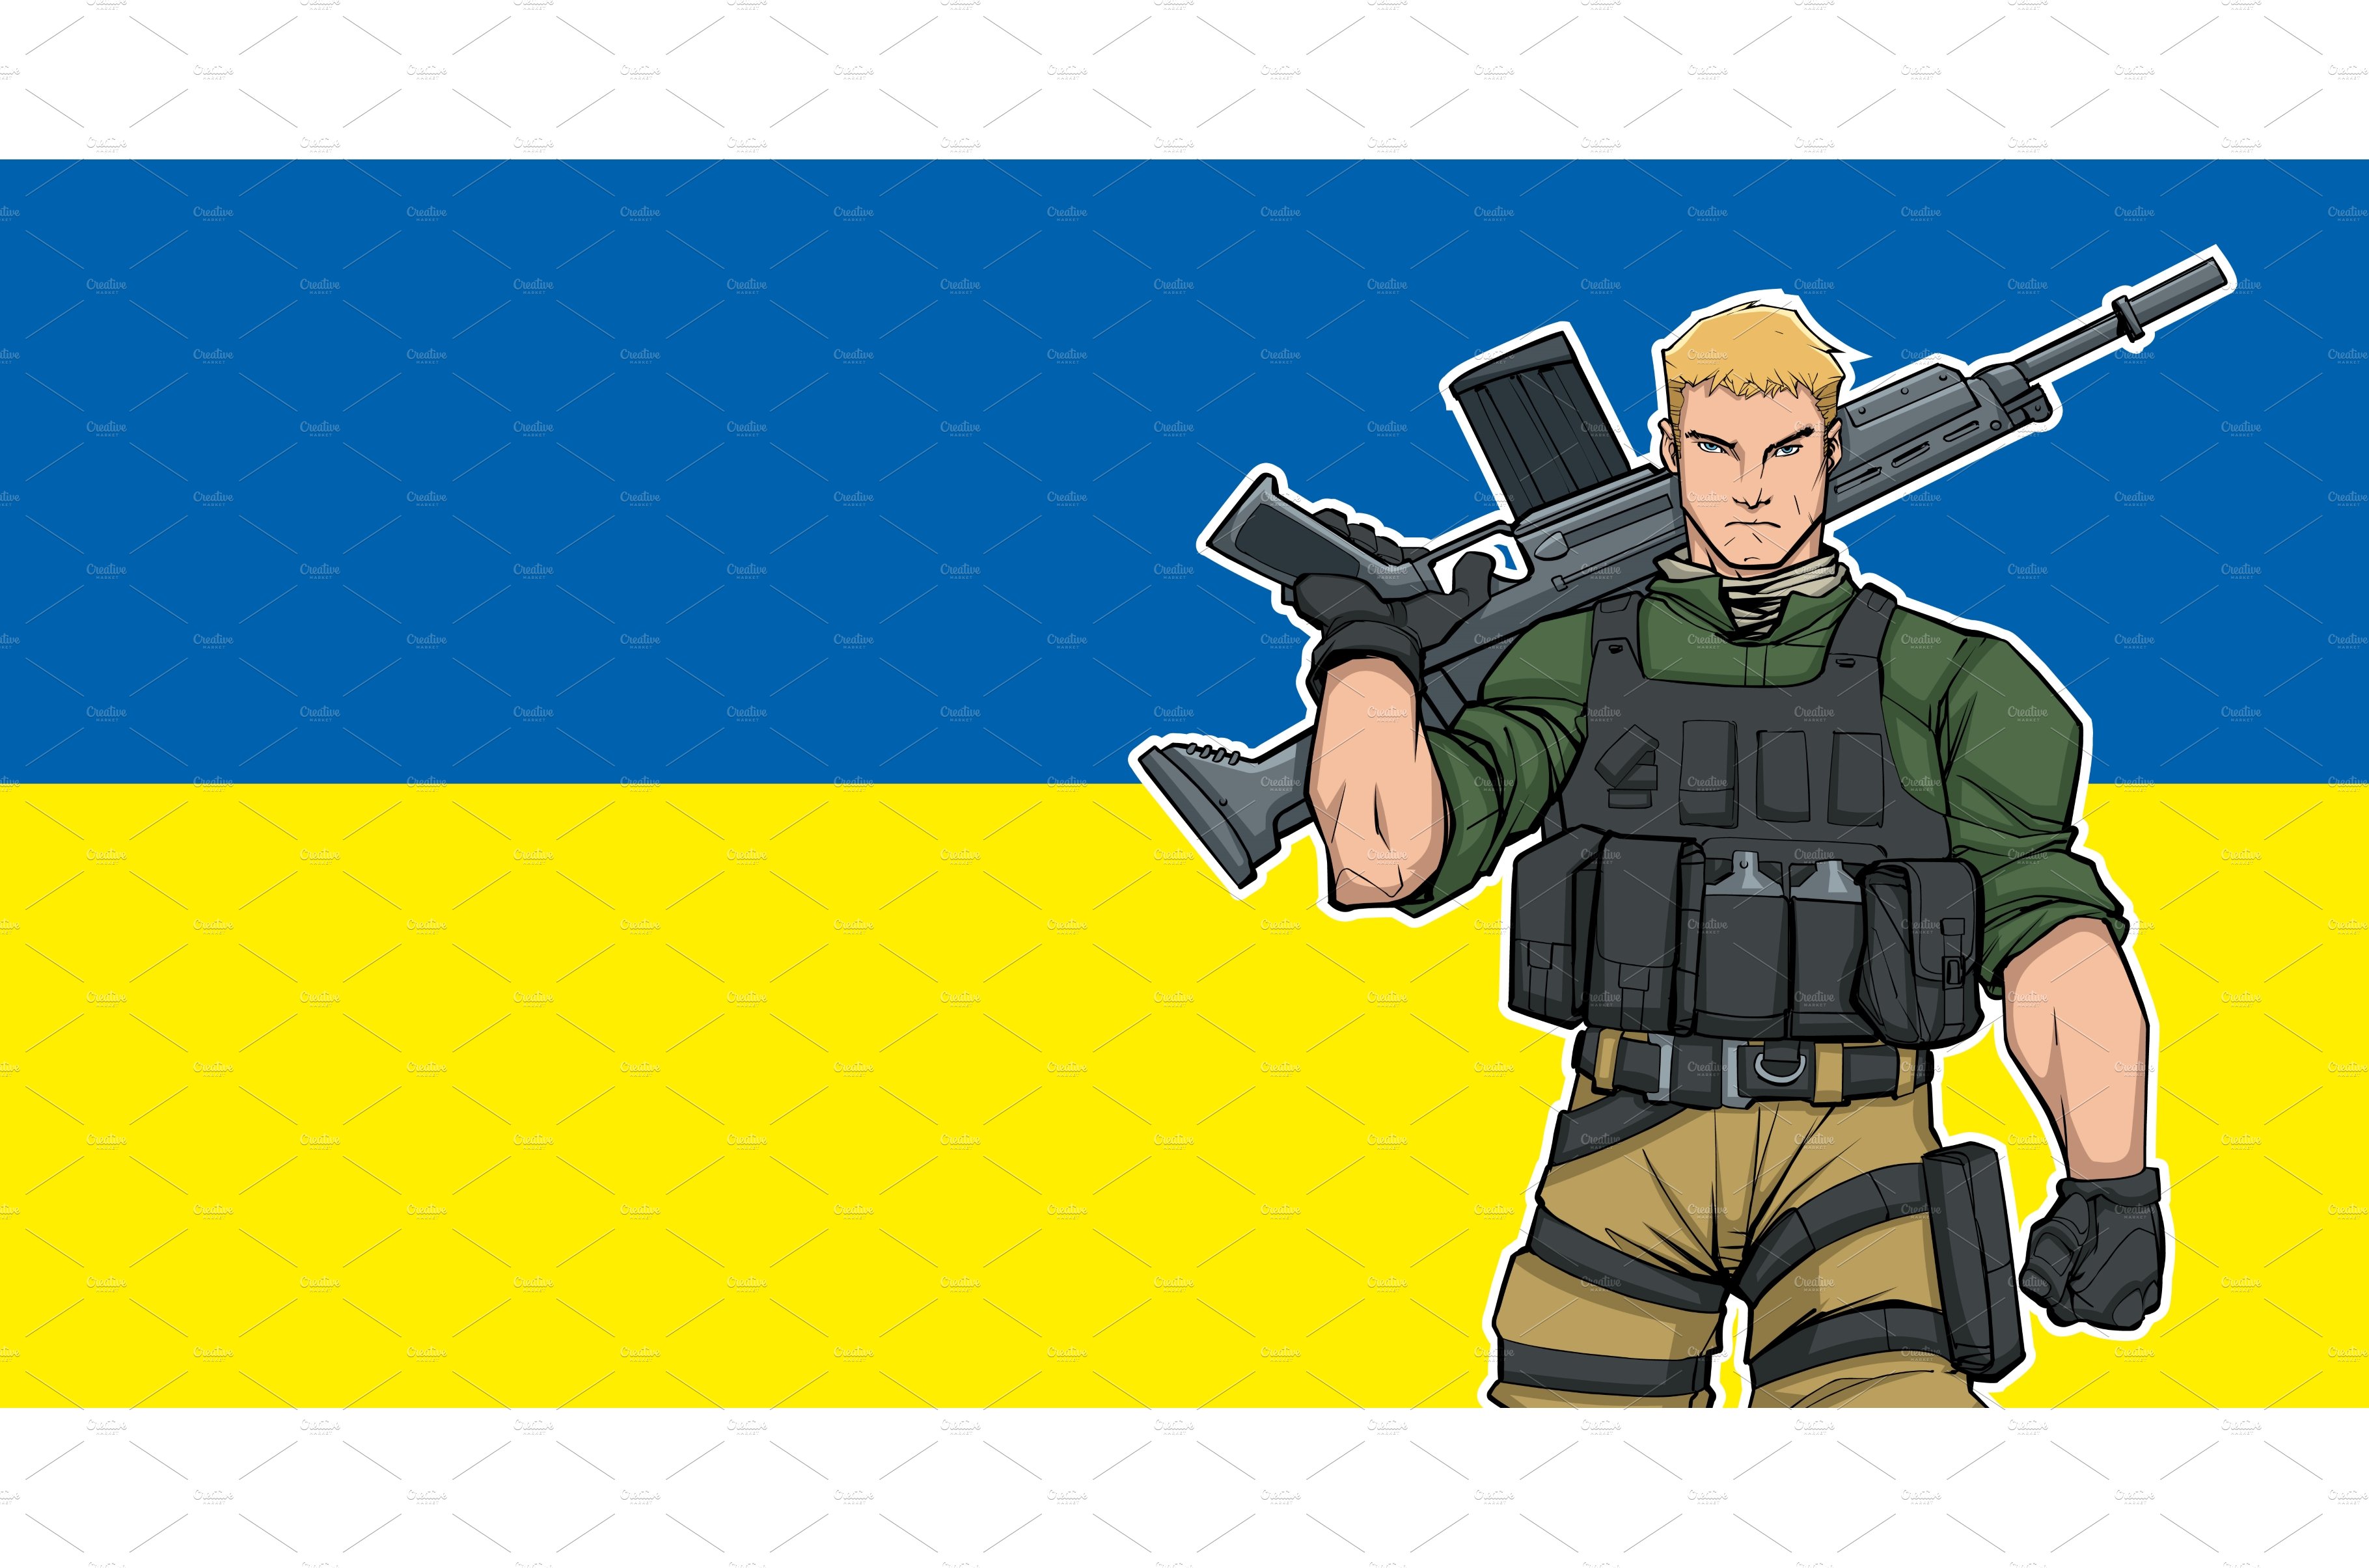 Ukrainian Soldier Background 2 cover image.